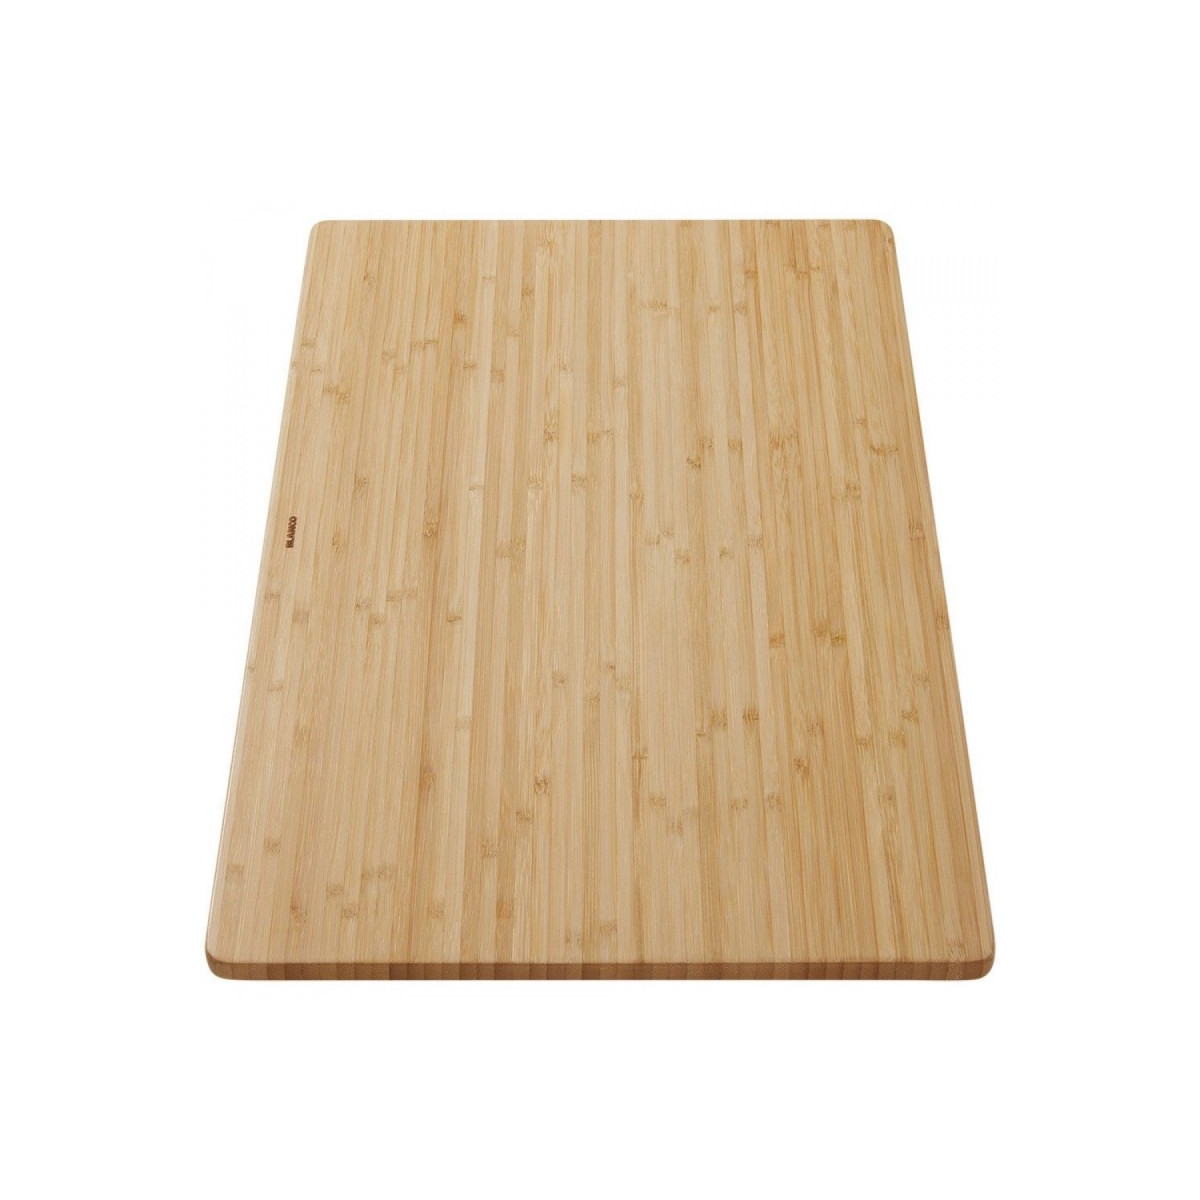 BLANCO bamboo chopping board for sink 德國Blanco竹製砧板 (239449)